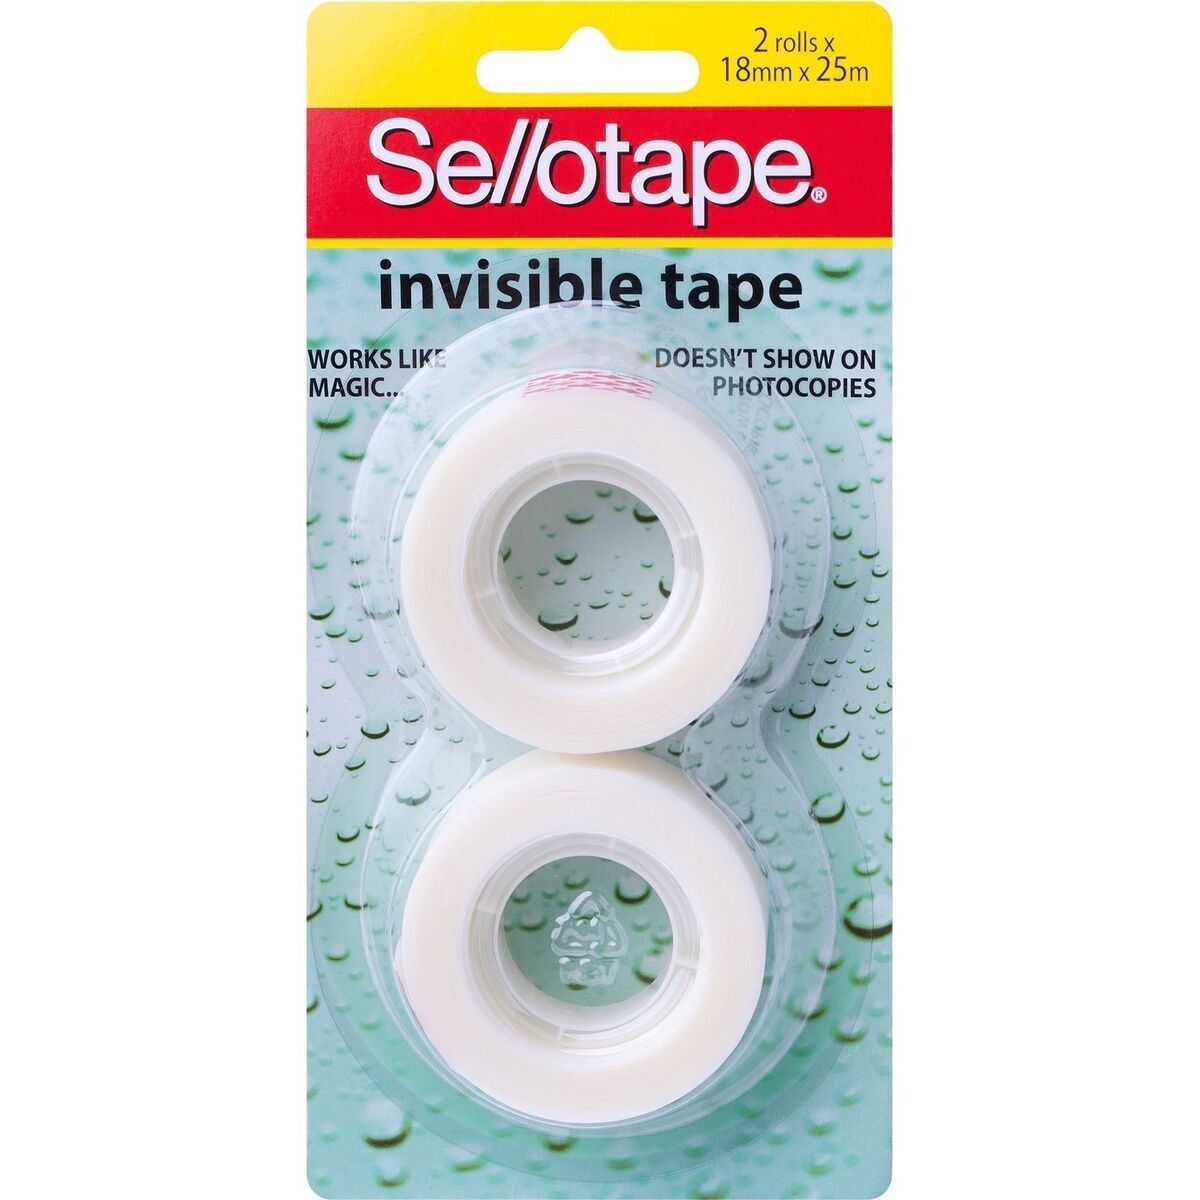 stationery Supplies|Tapes|SELLOTAPE Matt Finishing Tape 18mm x 25m Tape